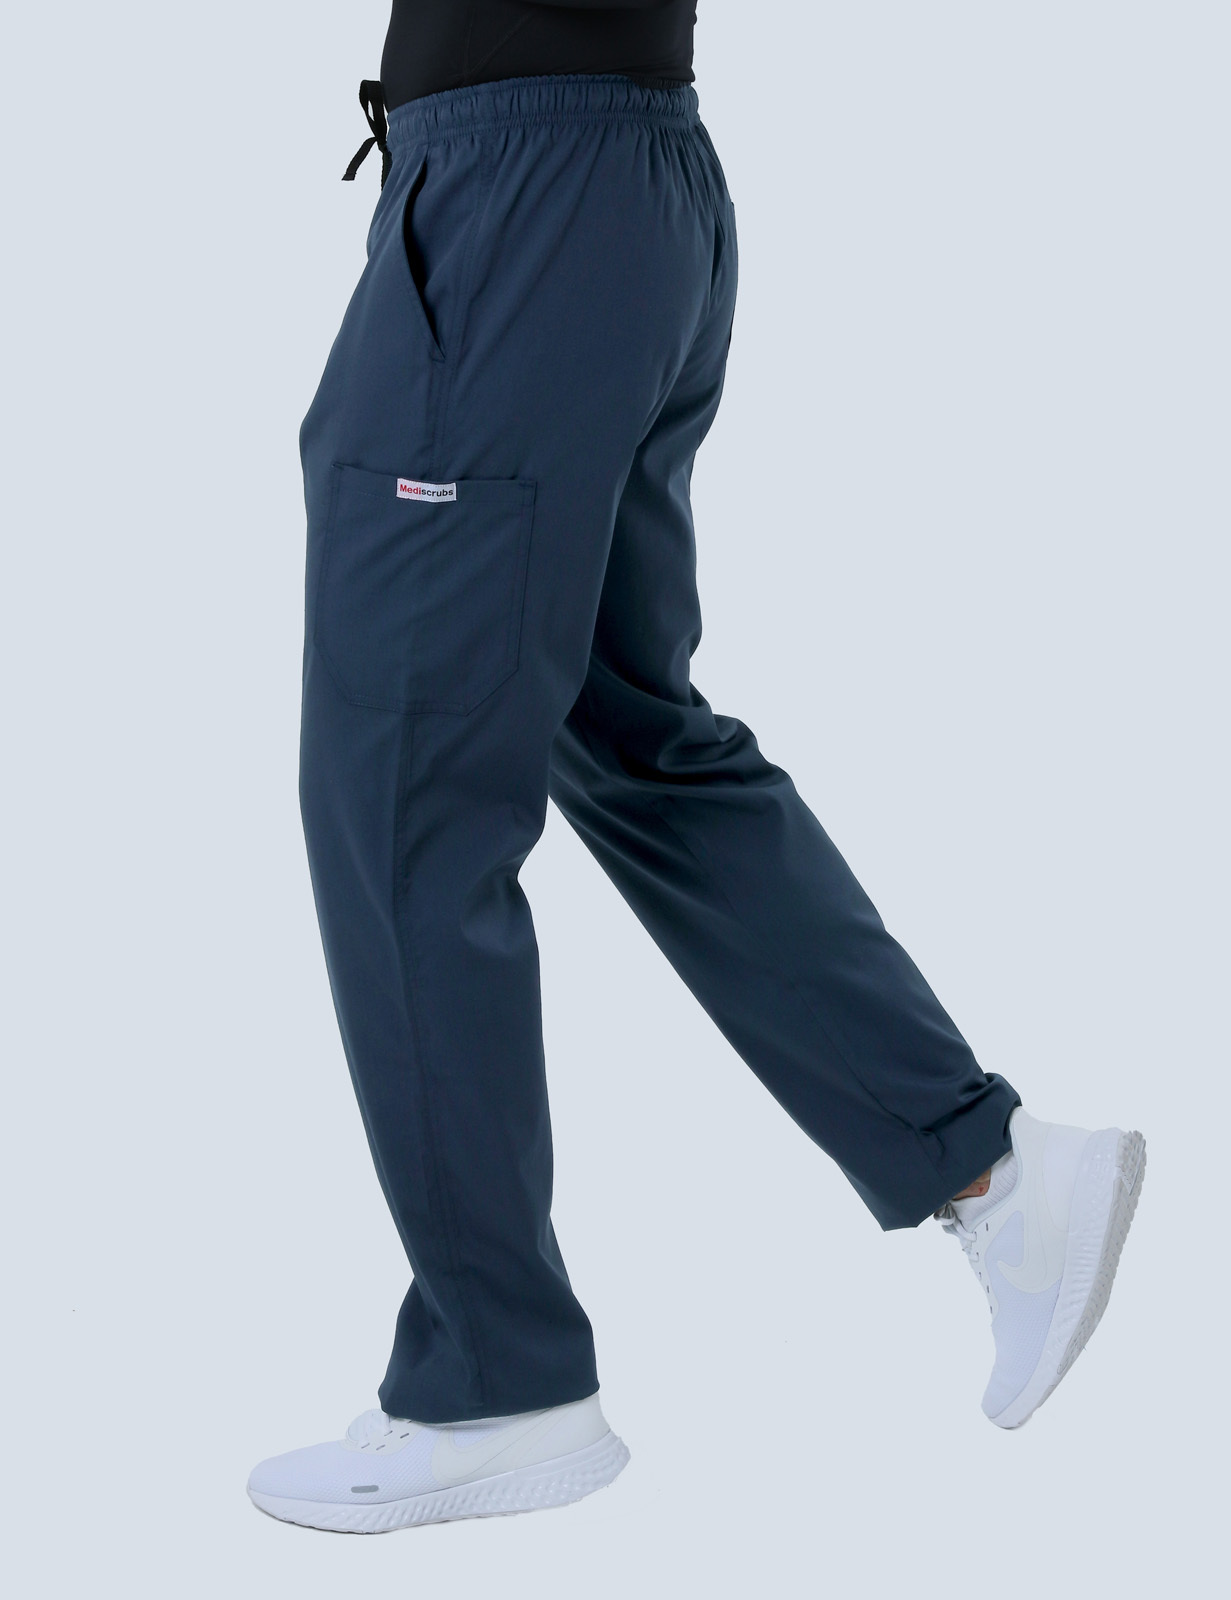 Men's Cargo Performance Pants - Navy - Large